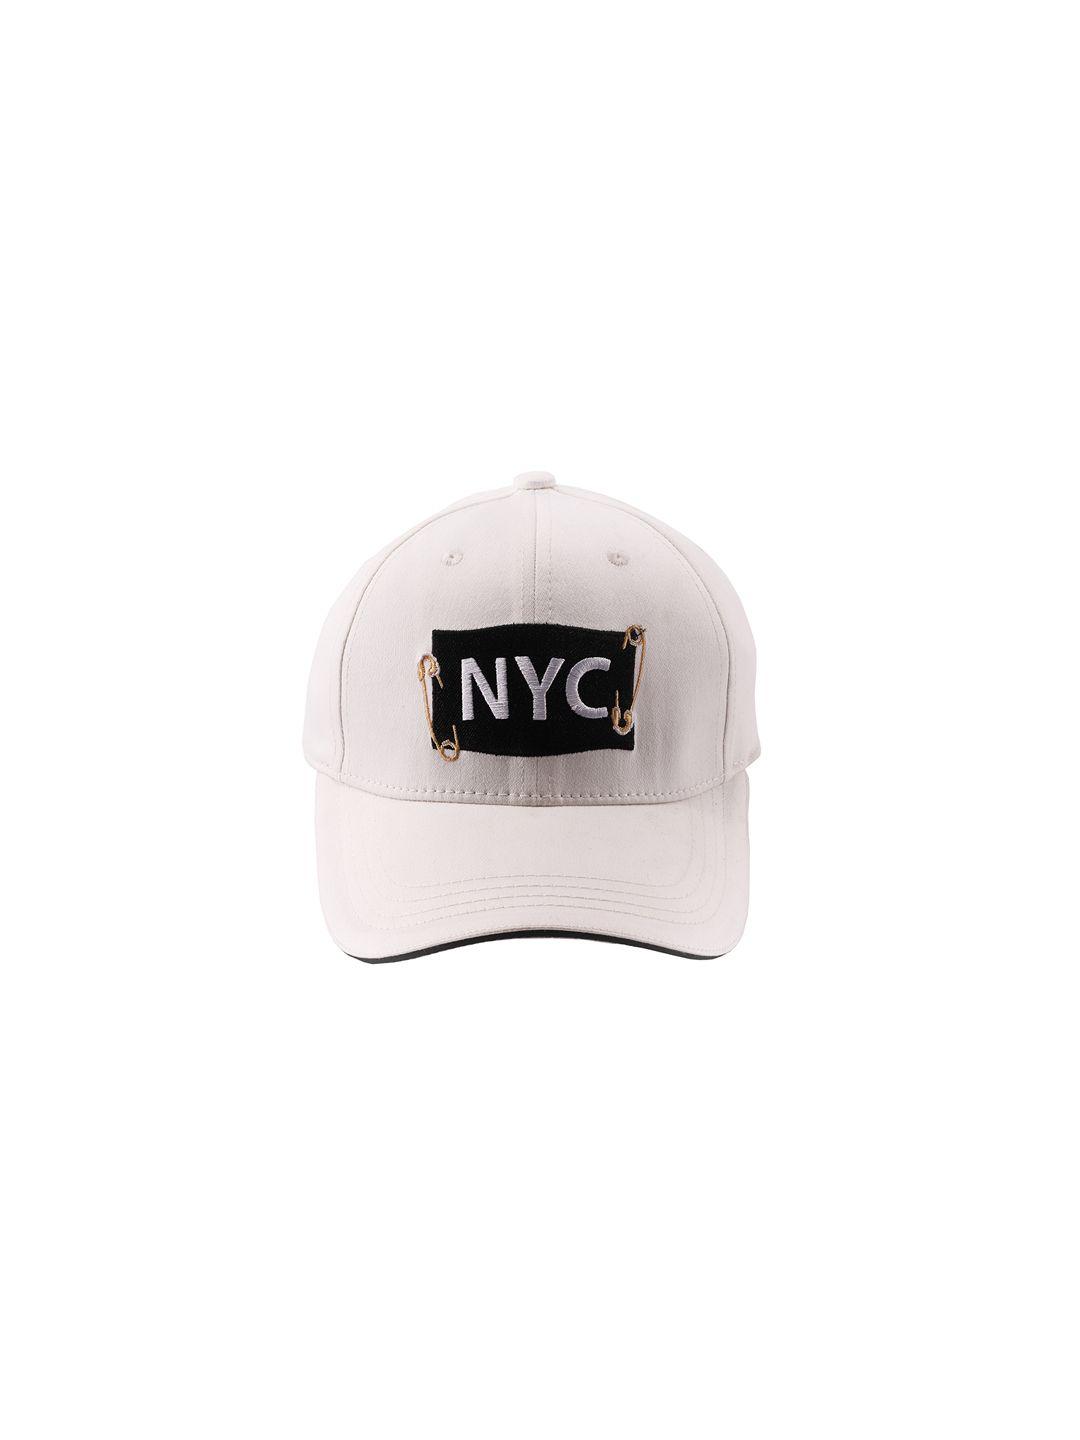 cap shap unisex white embroidered baseball cap